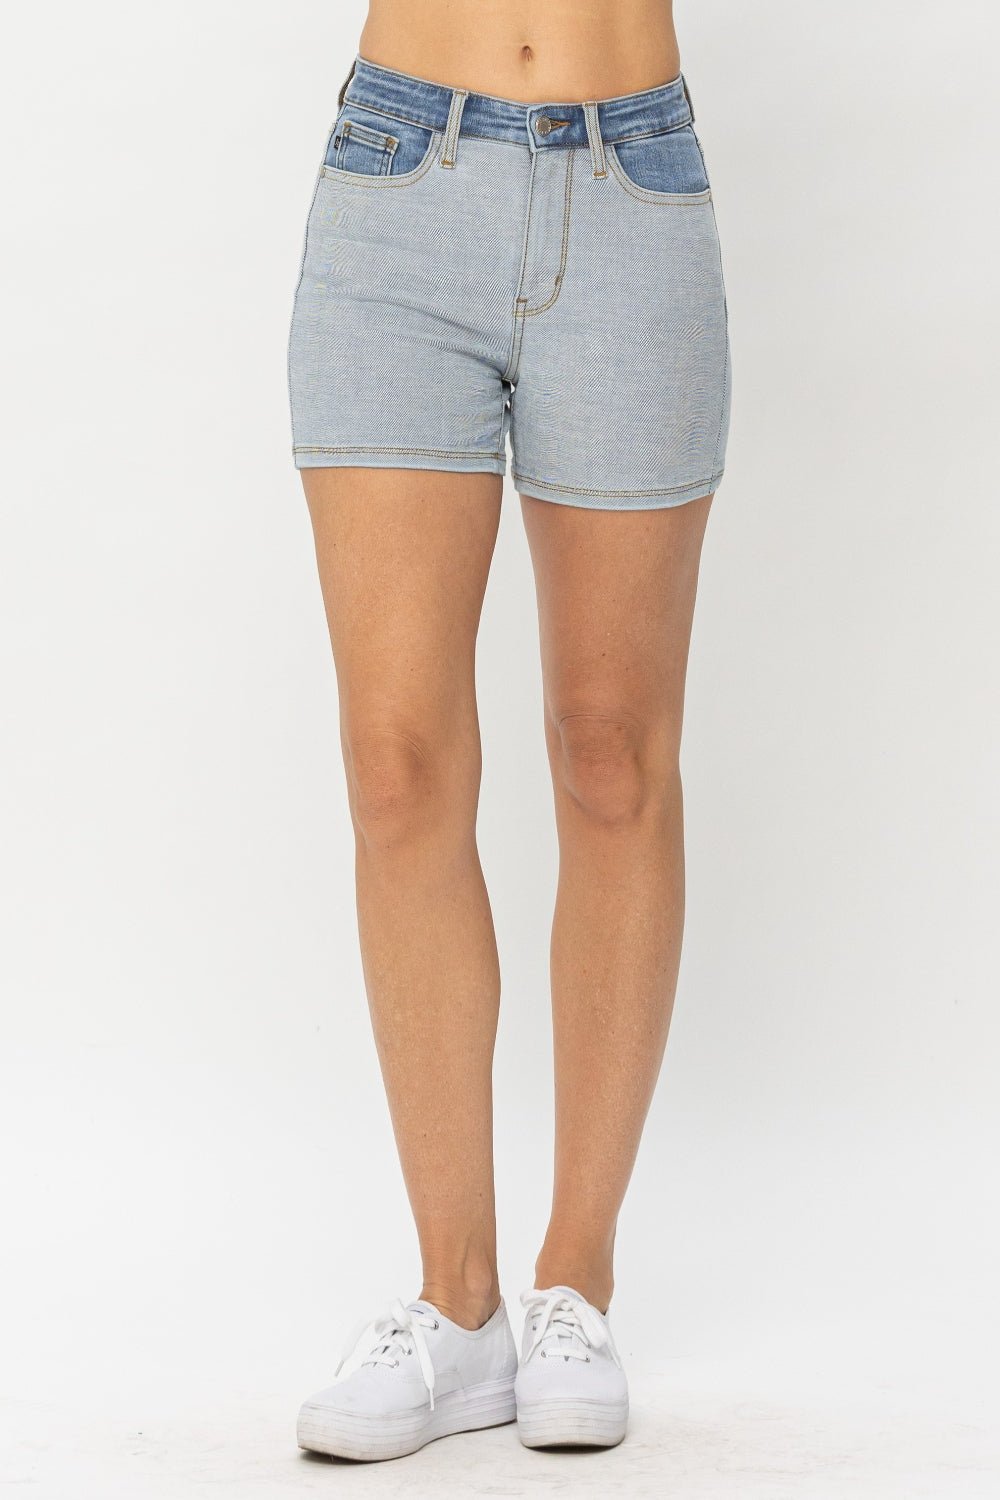 Judy Blue Full Size Color Block Denim Shorts - My Threaded Apparel | Online Women's Boutique - denim shorts